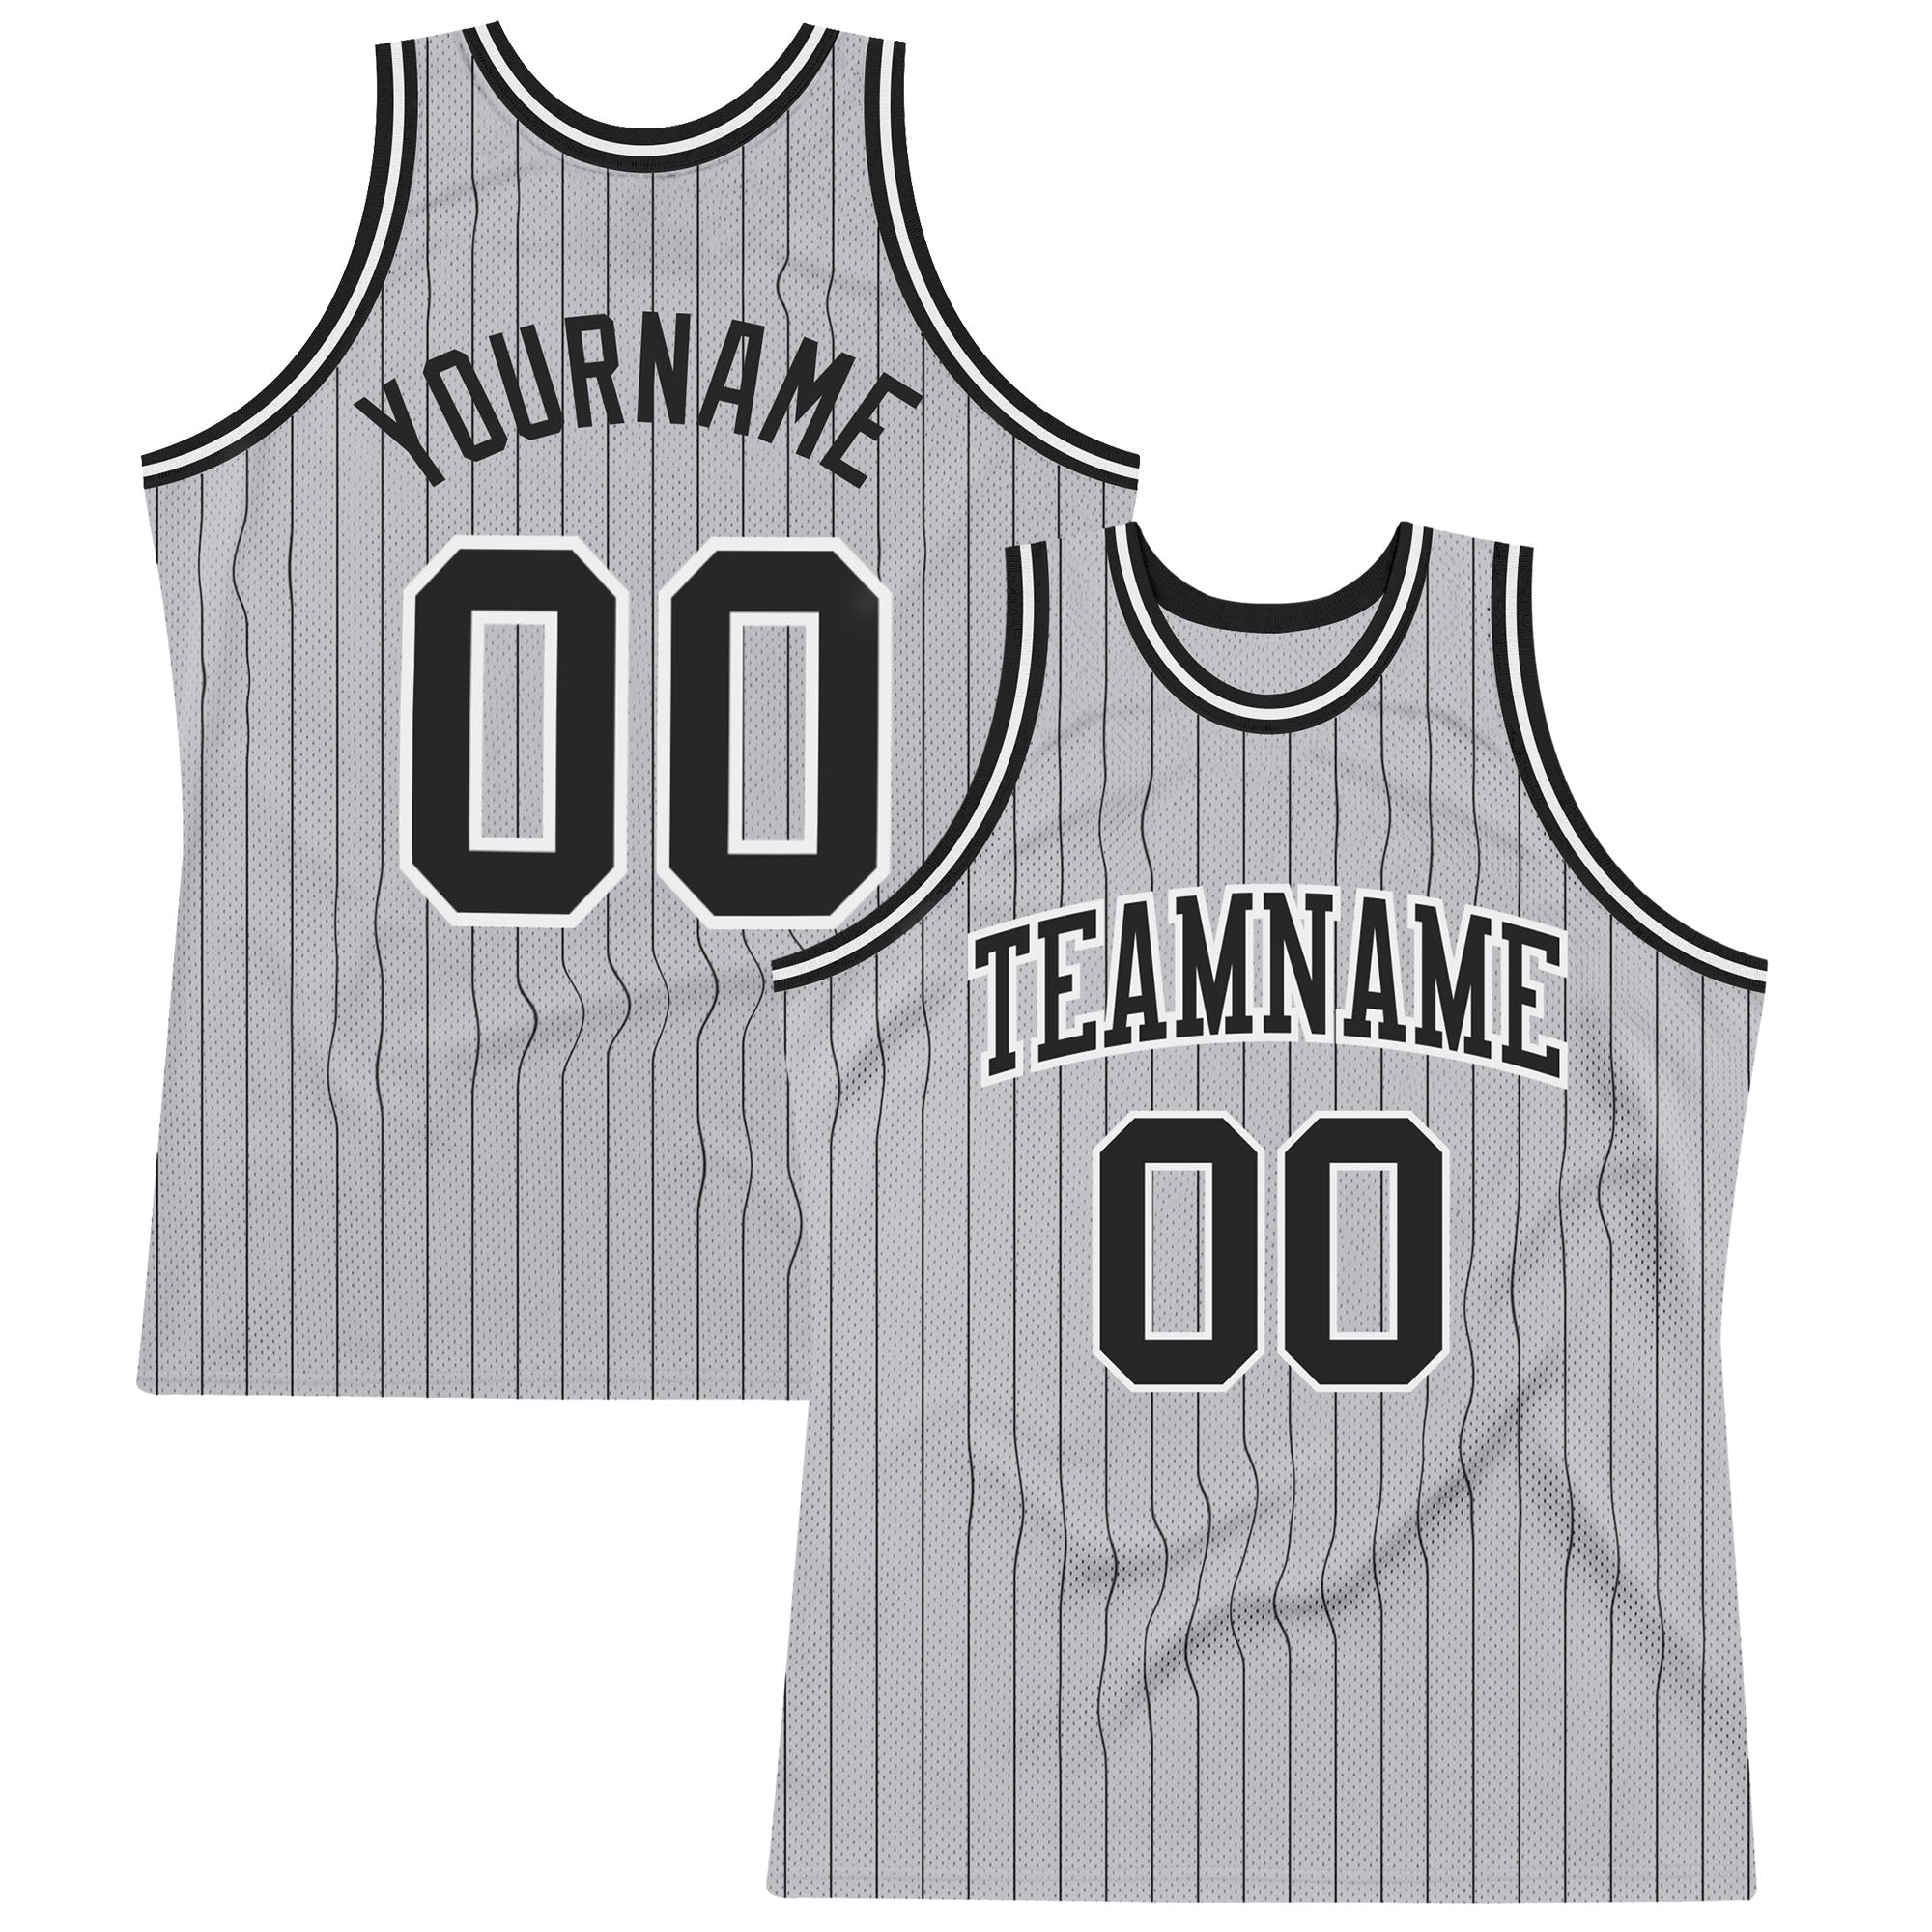 FANSIDEA Custom Black White Round Neck Basketball Jersey Men's Size:XL